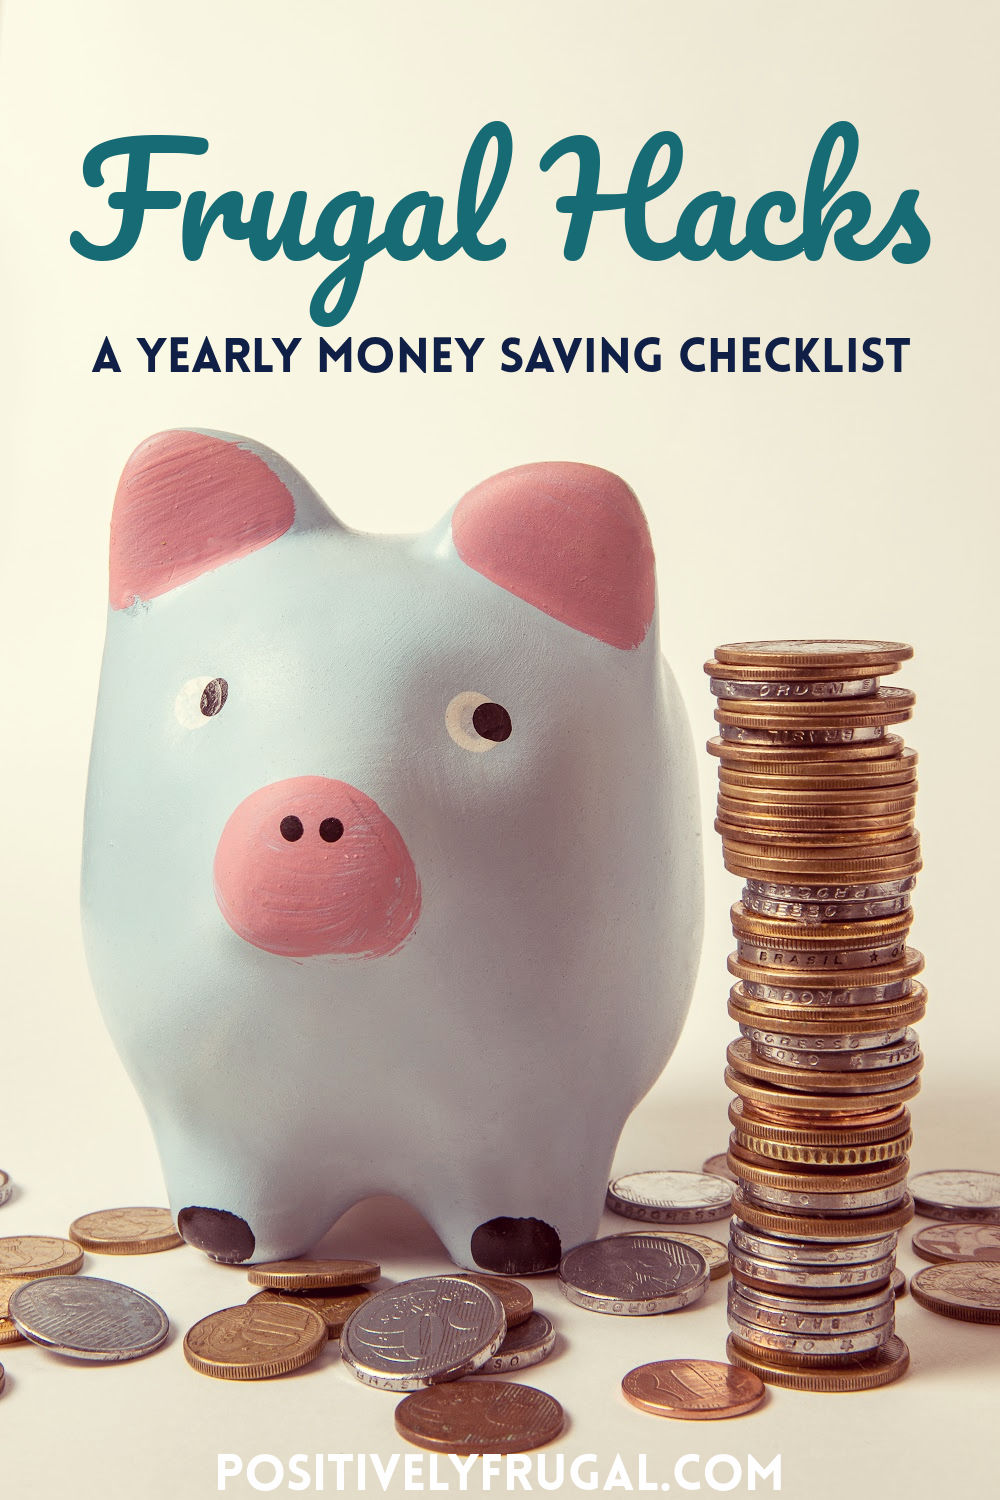 Frugal Hacks Yearly Money Saving Checklist by PositivelyFrugal.com